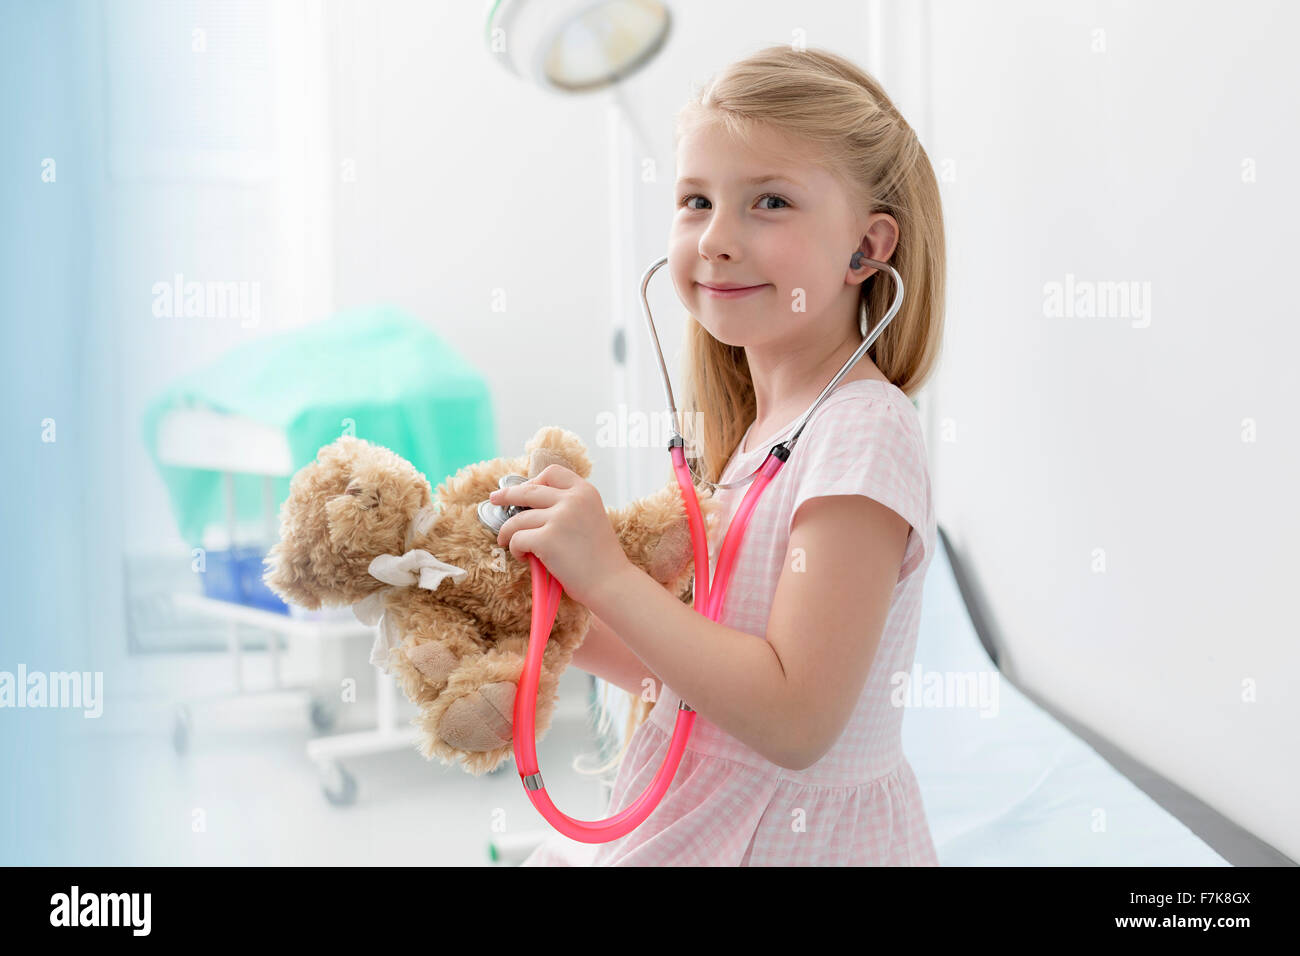 Portrait smiling girl using stethoscope on ours en salle d'examen Banque D'Images